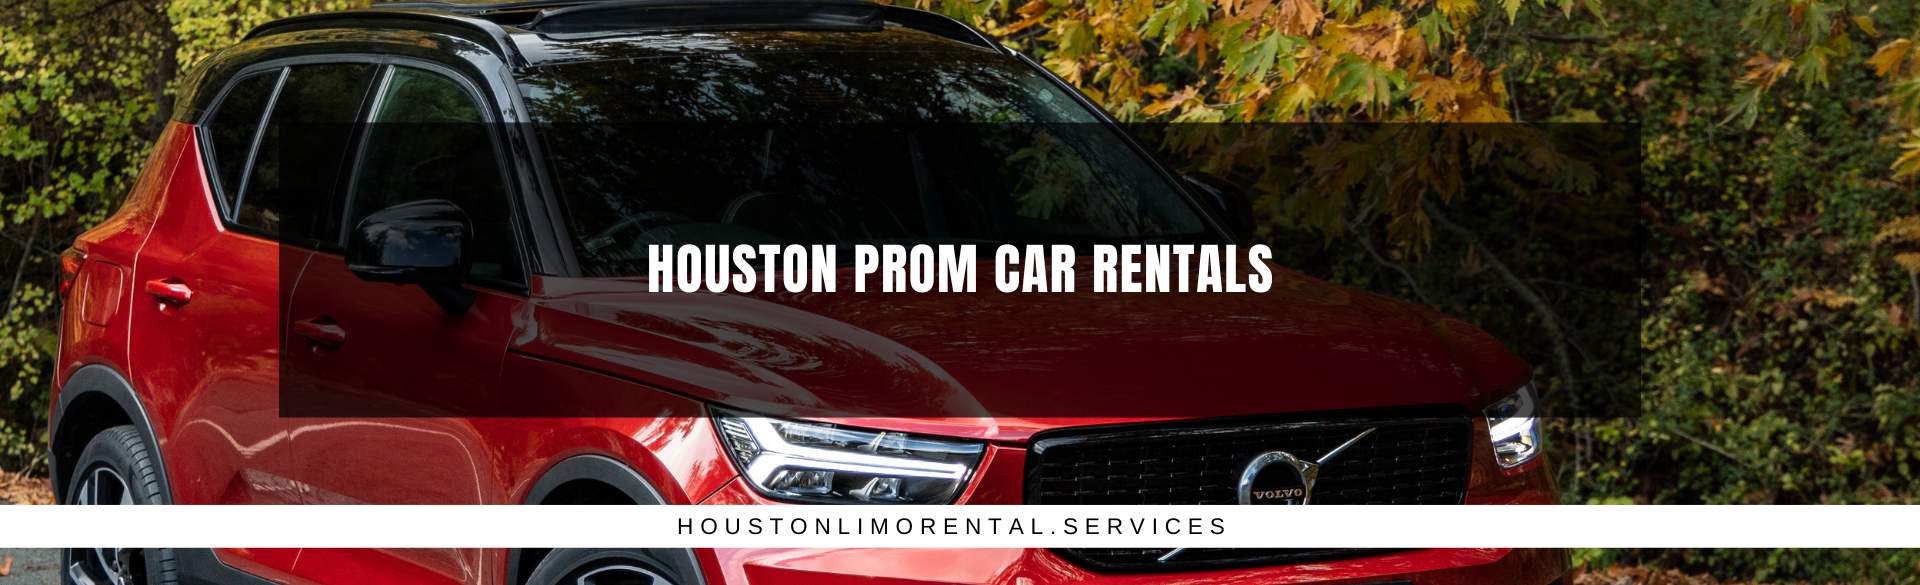 Houston Prom Car Rentals